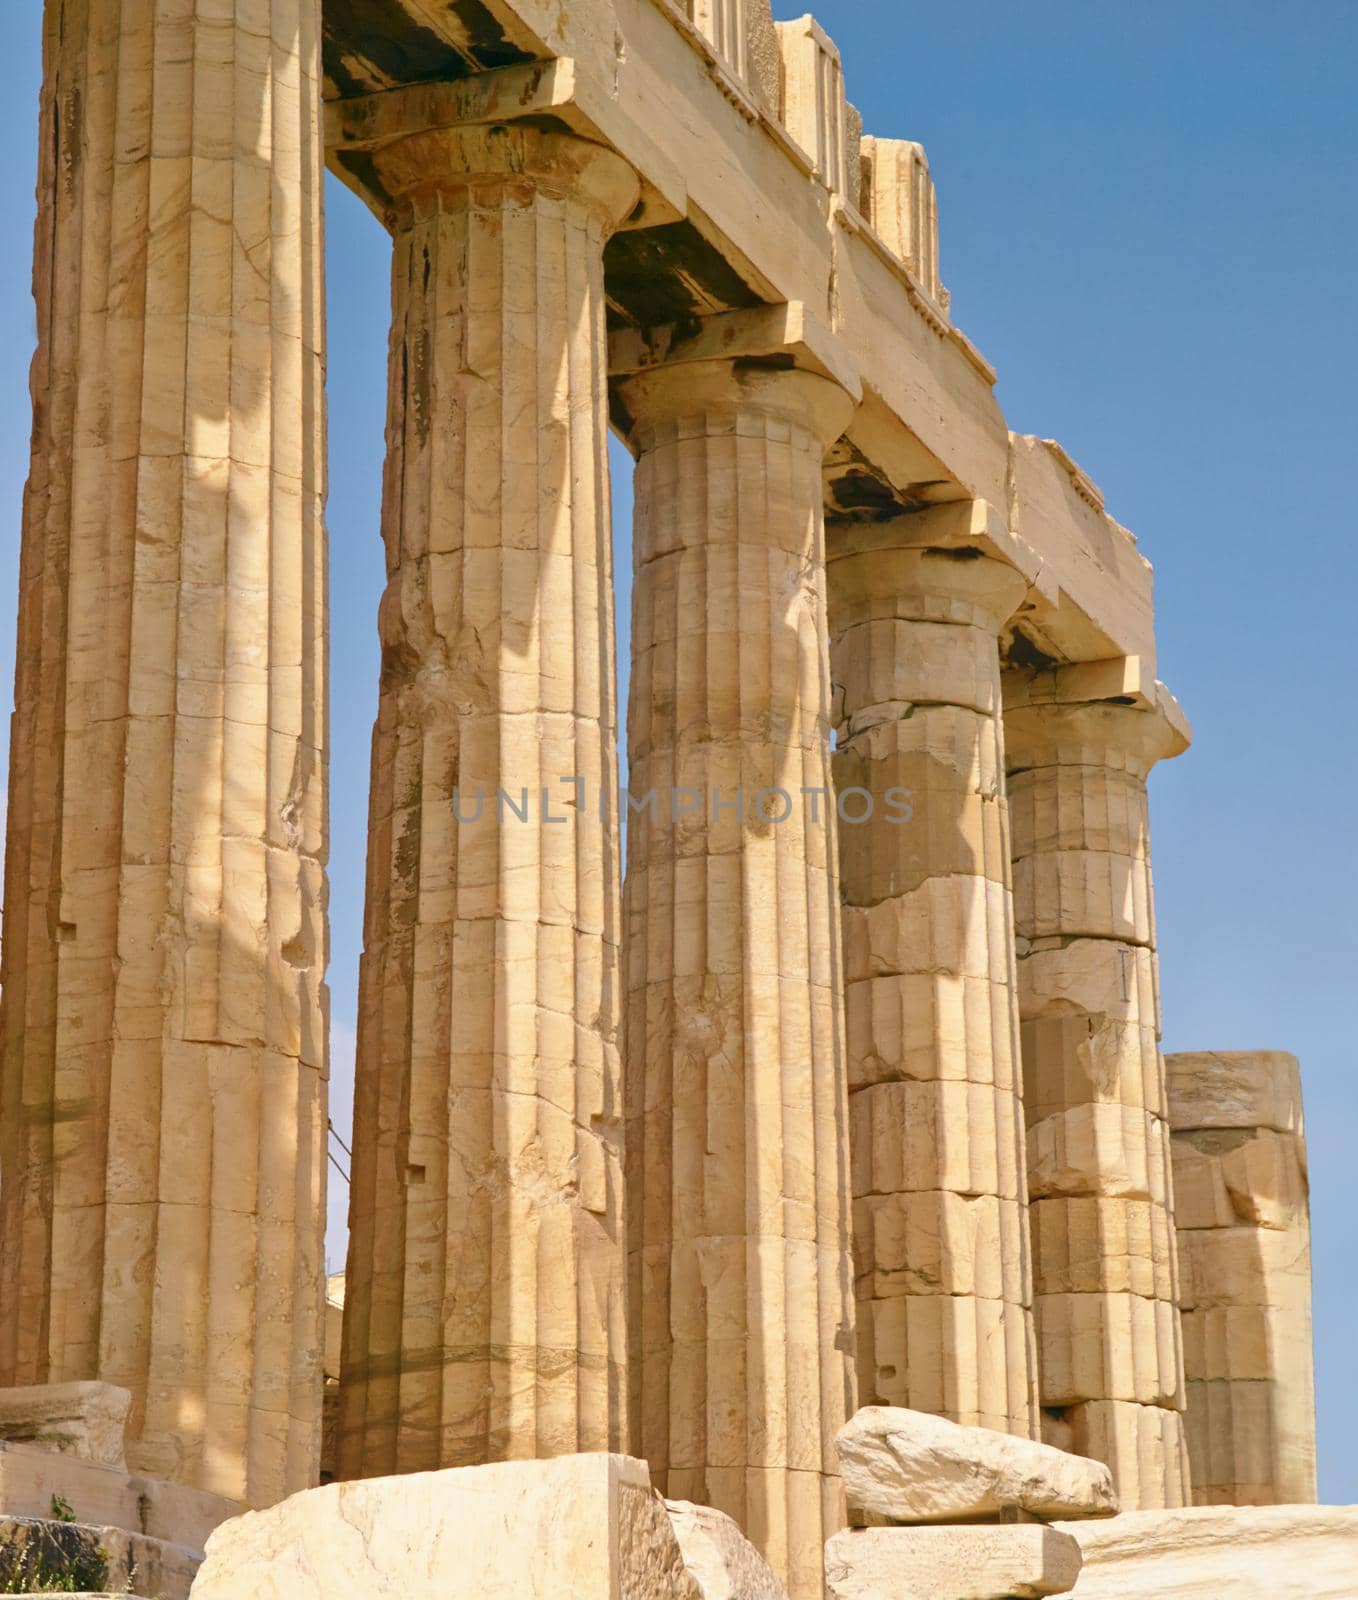 OLYMPUS DIGITAL CAMERA. Giant pillars in Acropolis, Greece. by YuriArcurs